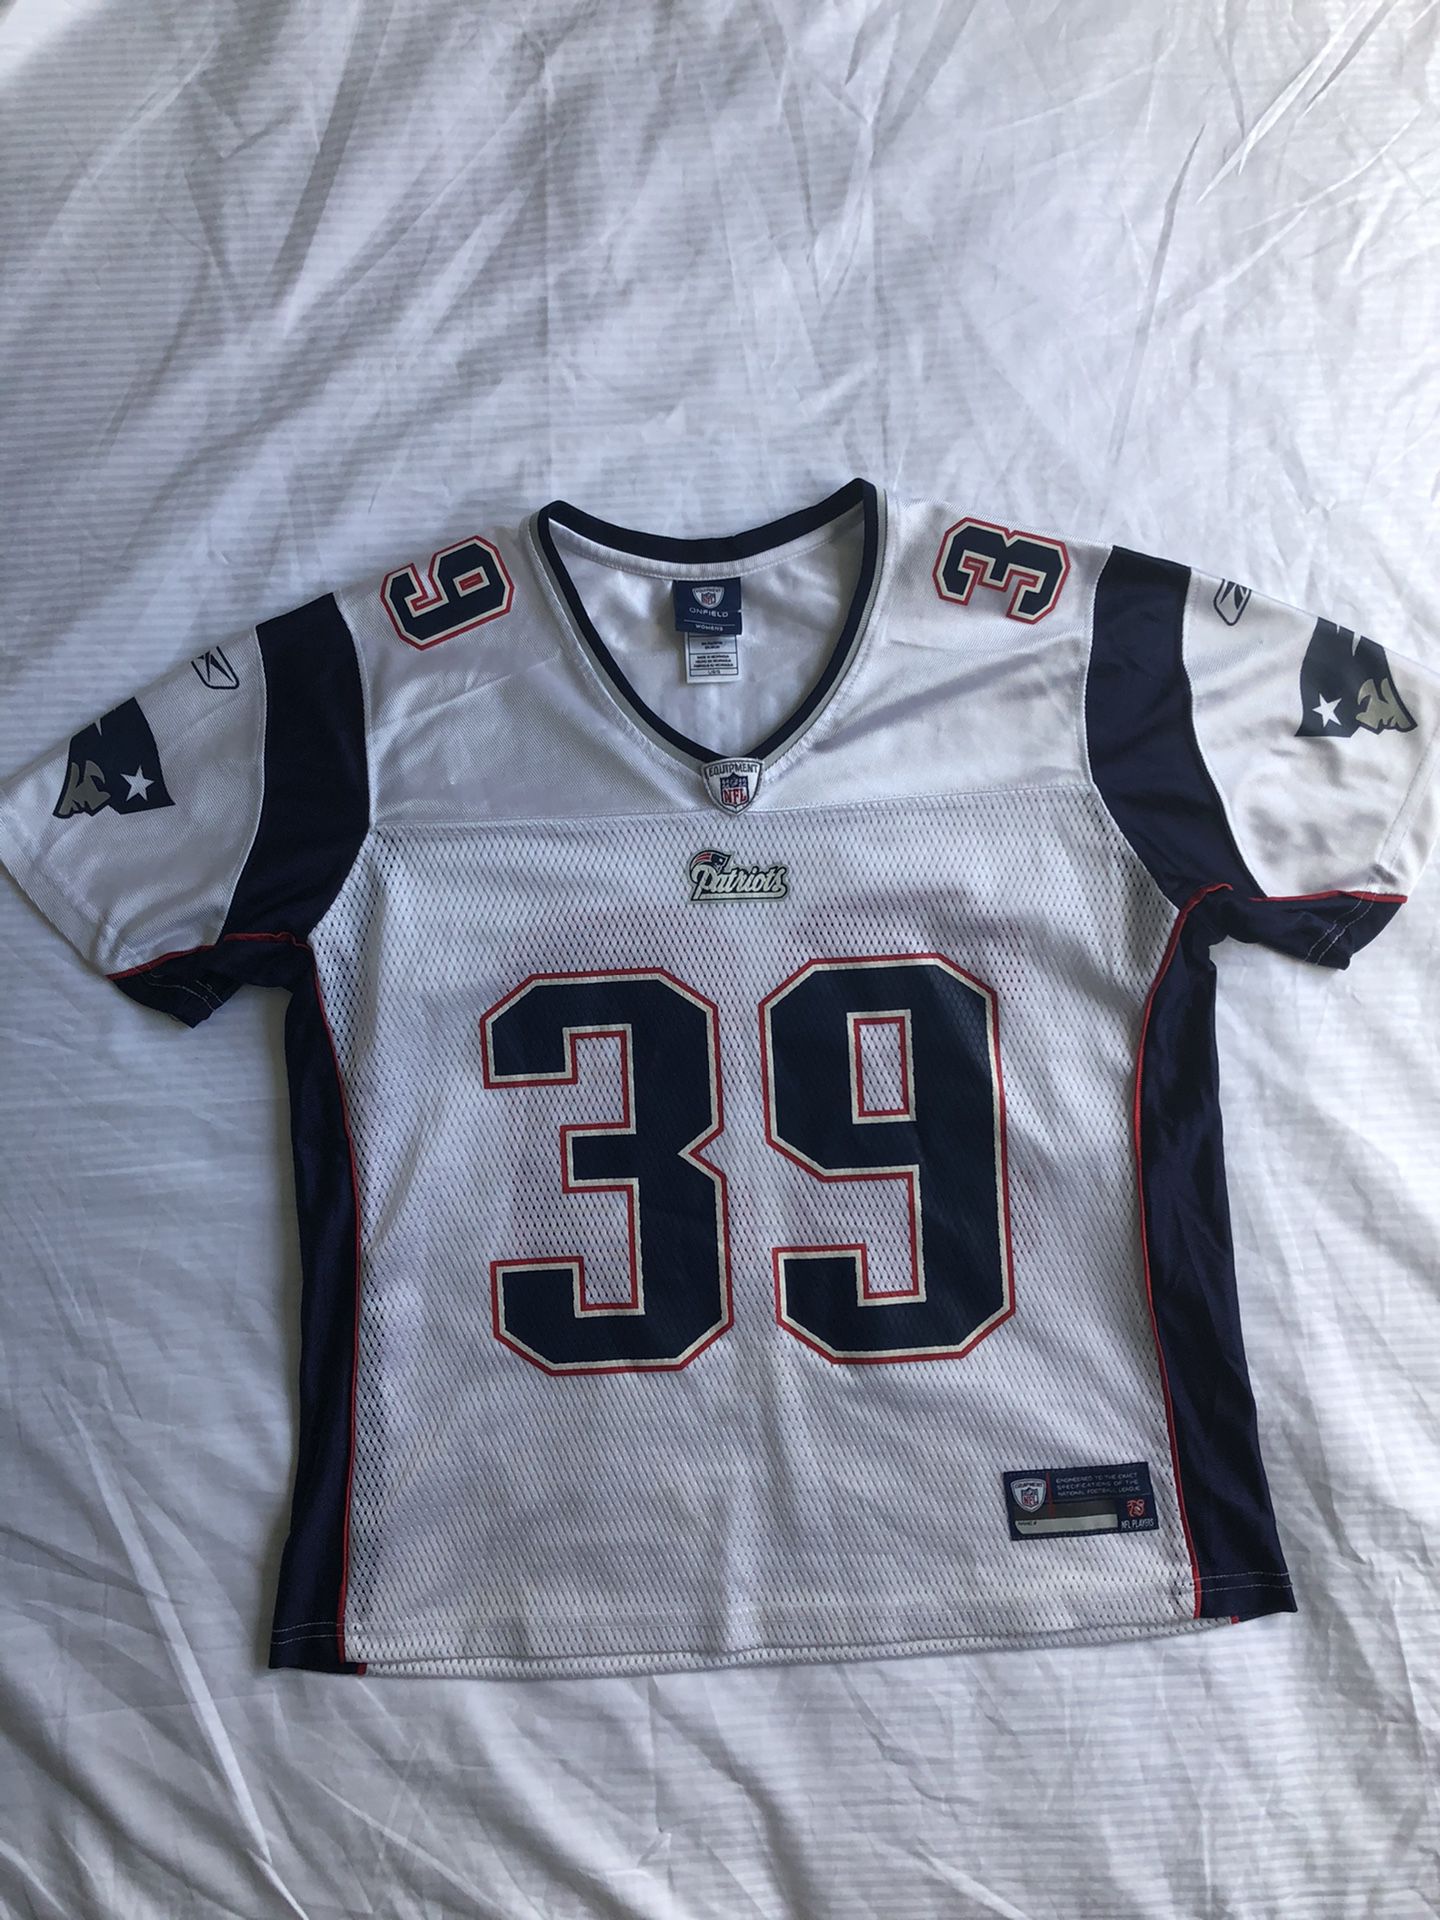 Patriots jersey #39